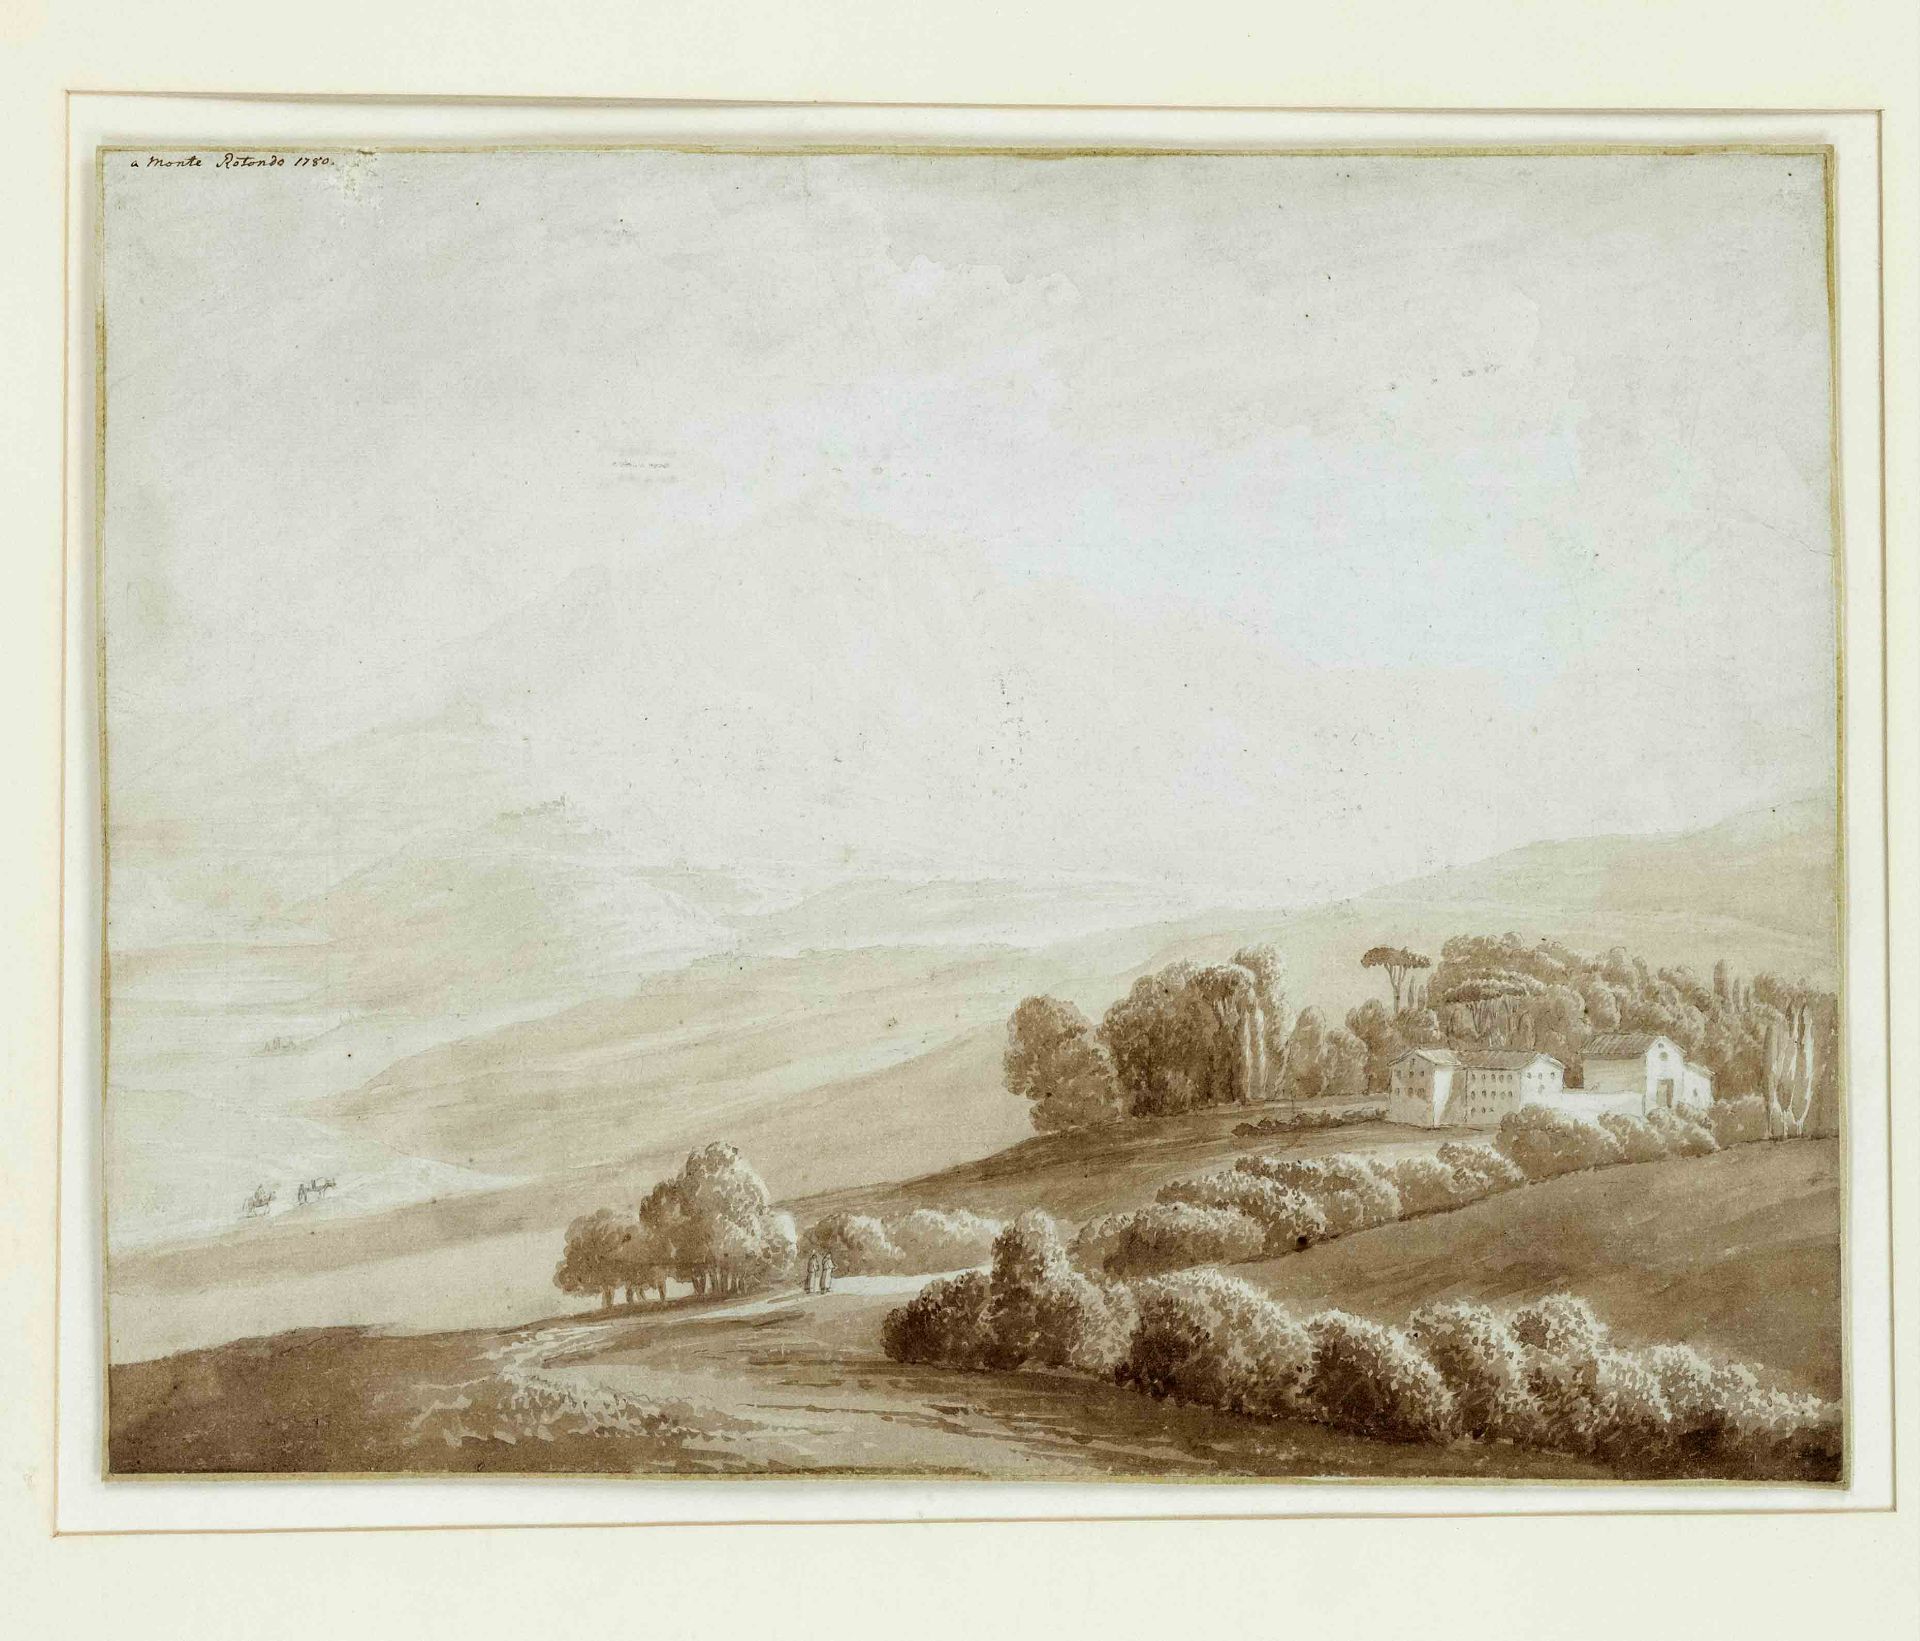 Jacob Philipp Hackert (1737-1807) (attrib.), ''A monte Rotondo 1780'', Landscape around the mountain